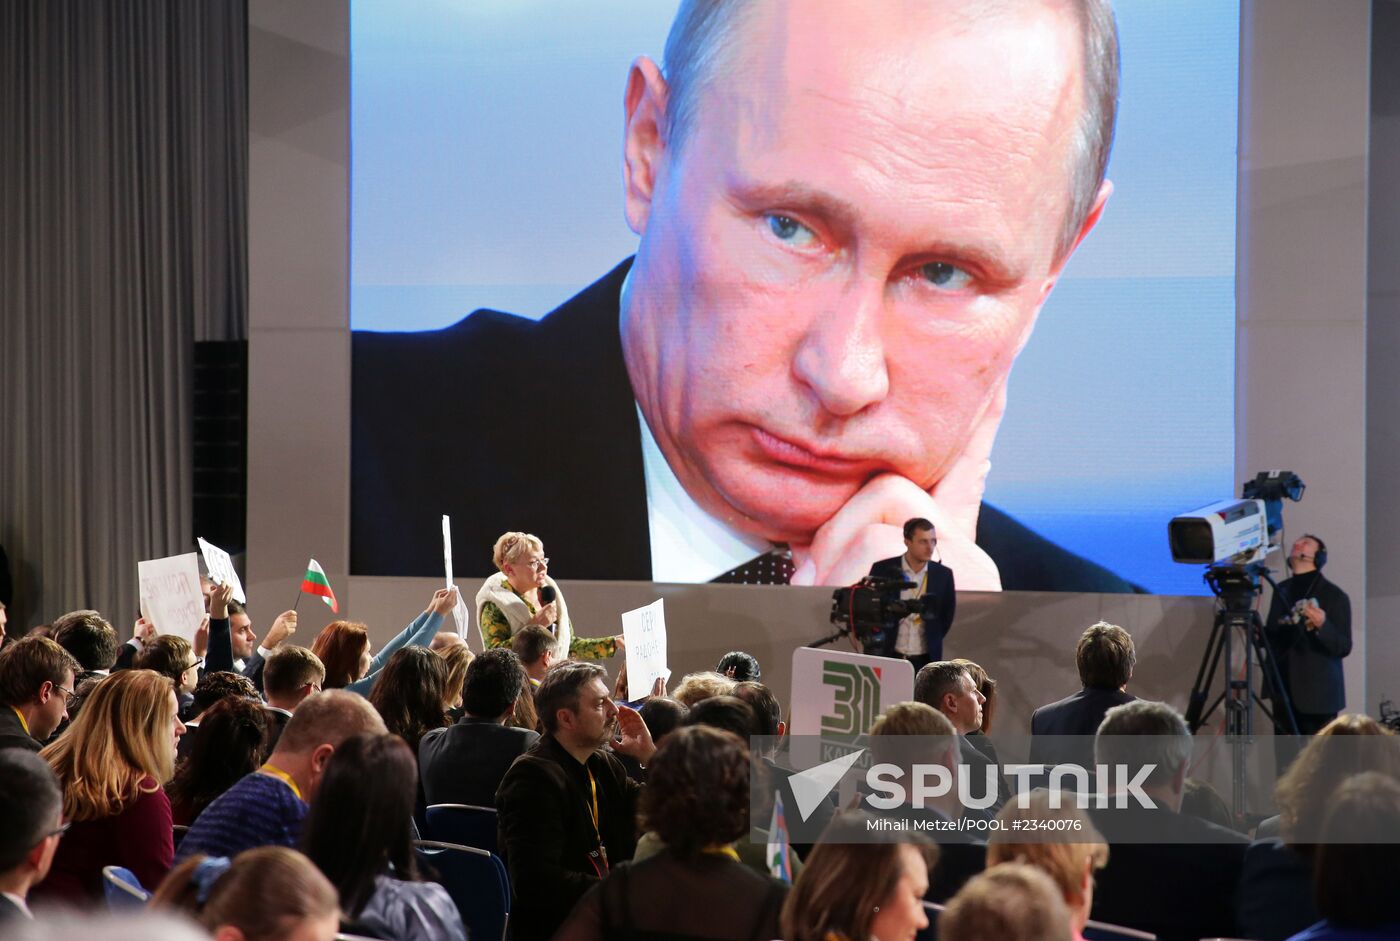 Q&A session by President Vladimir Putin